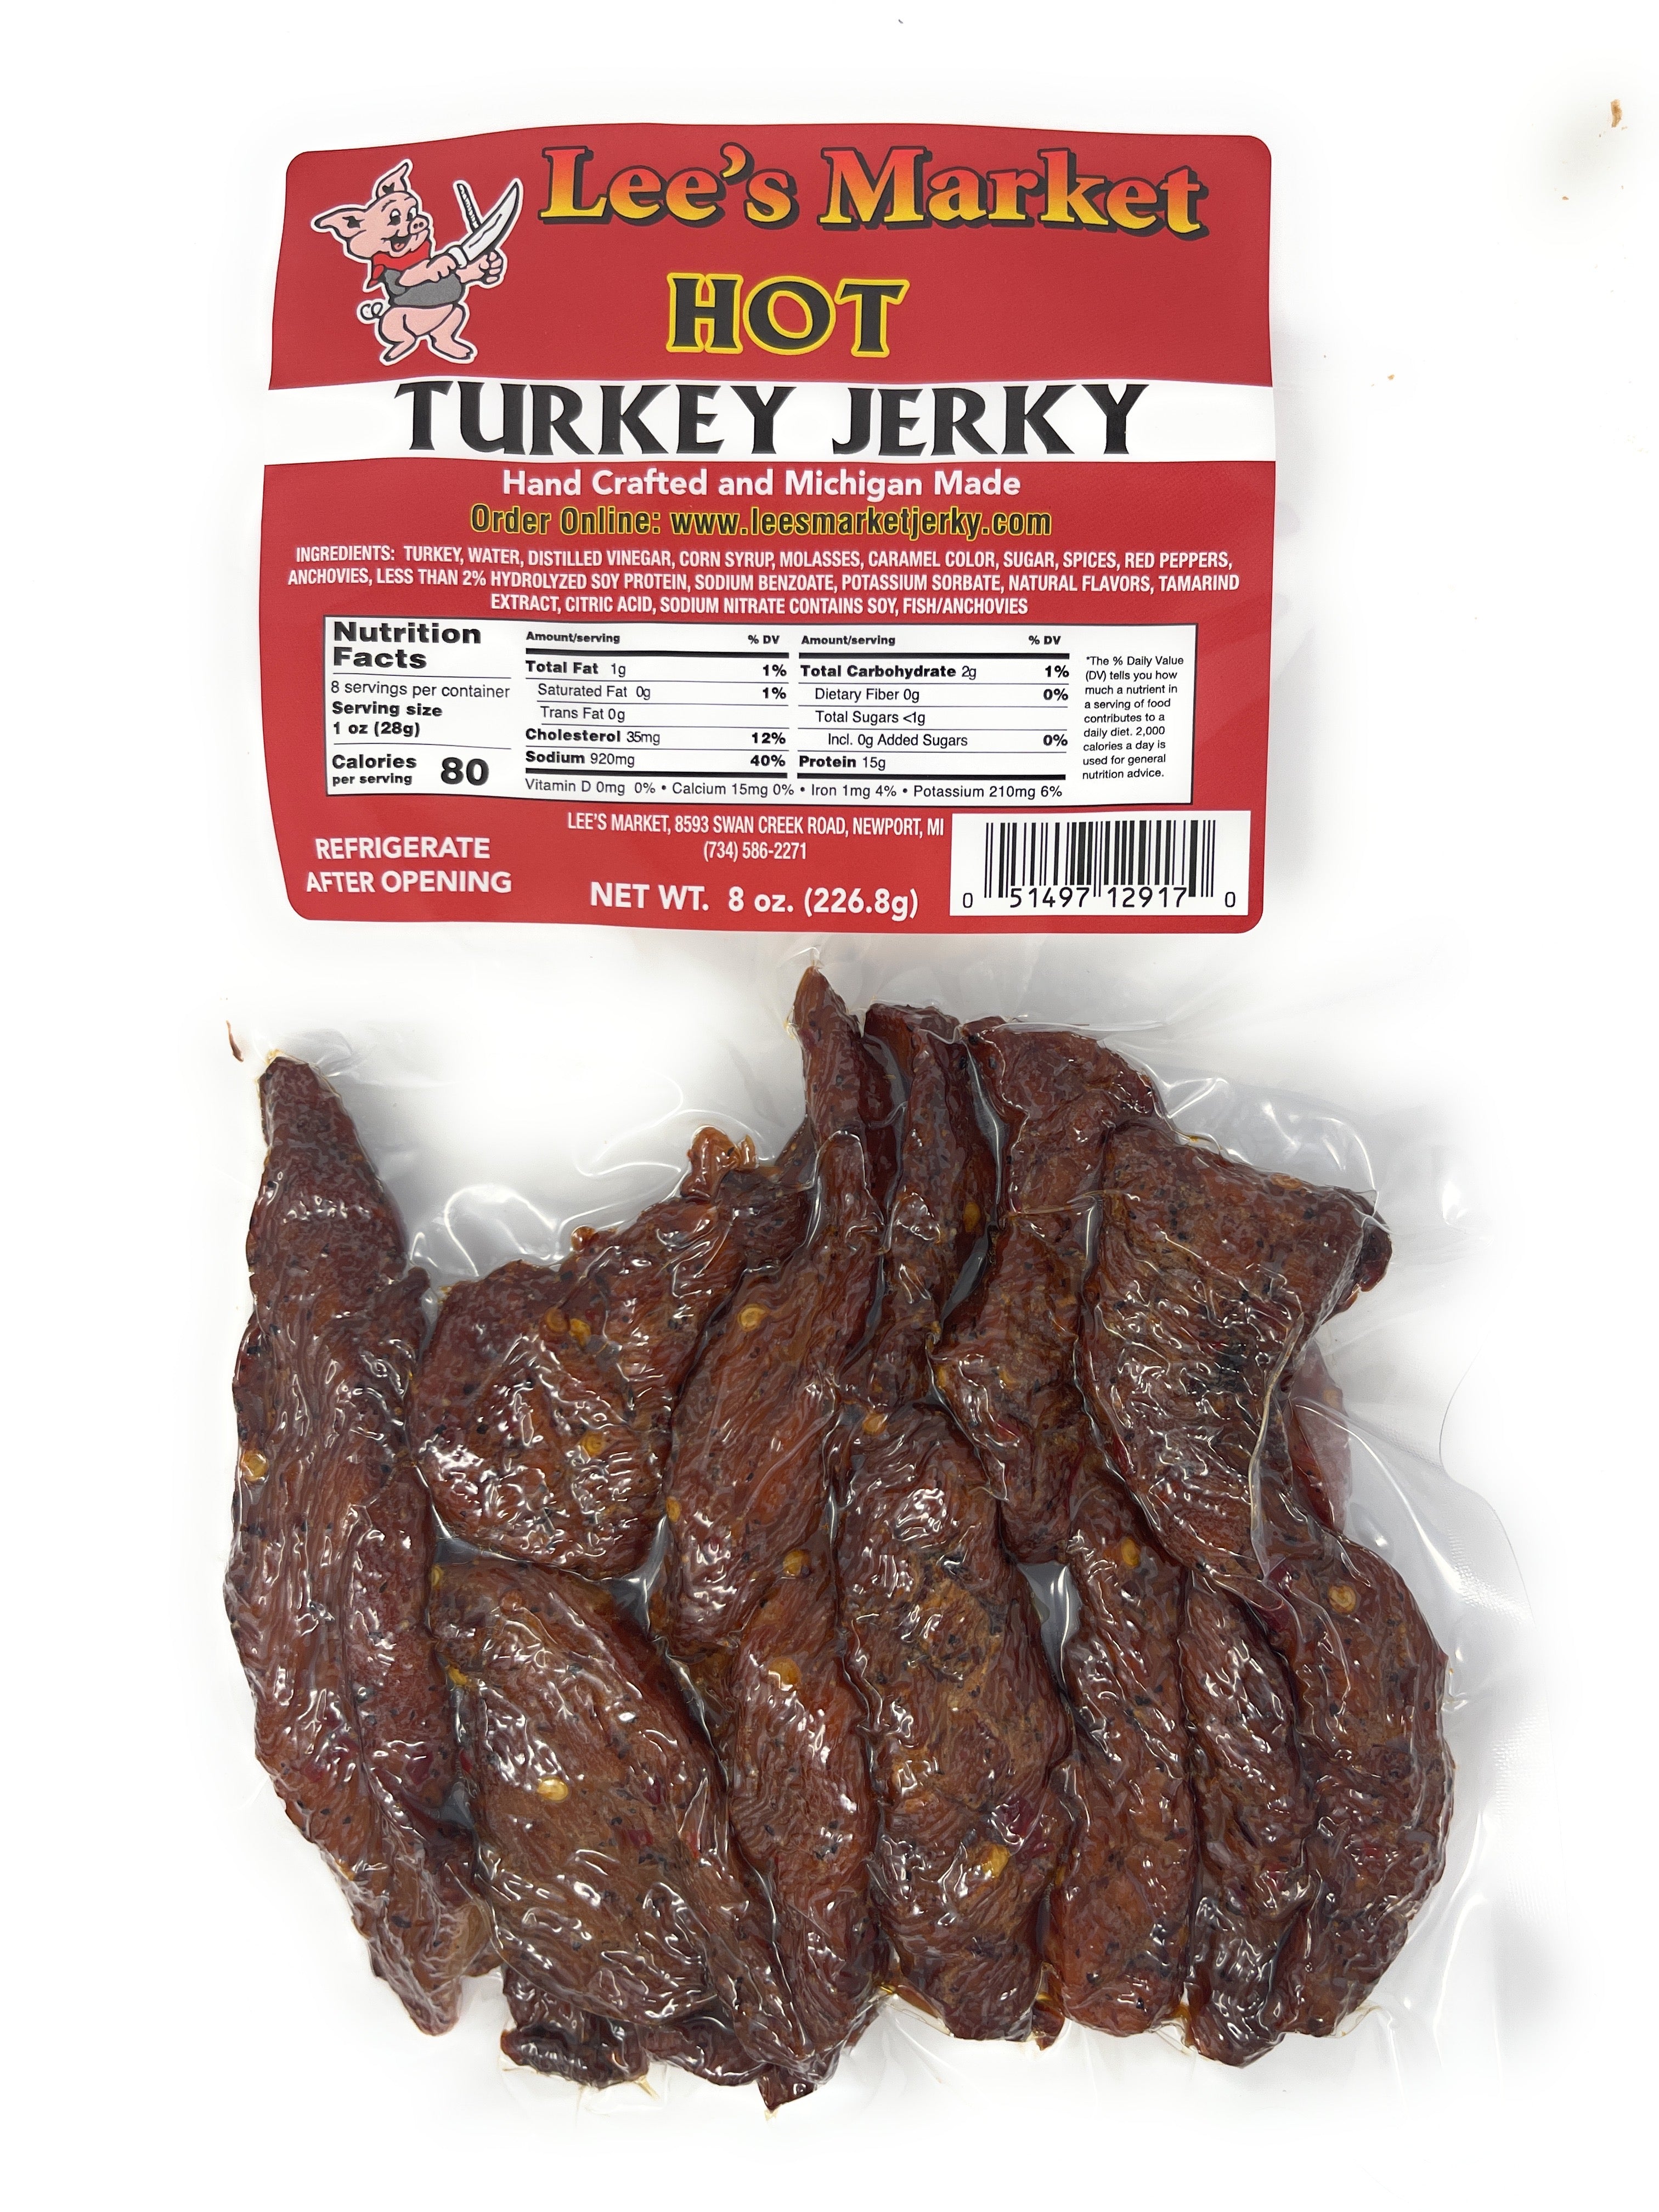 How to Make Sweet & Spicy Turkey Jerky